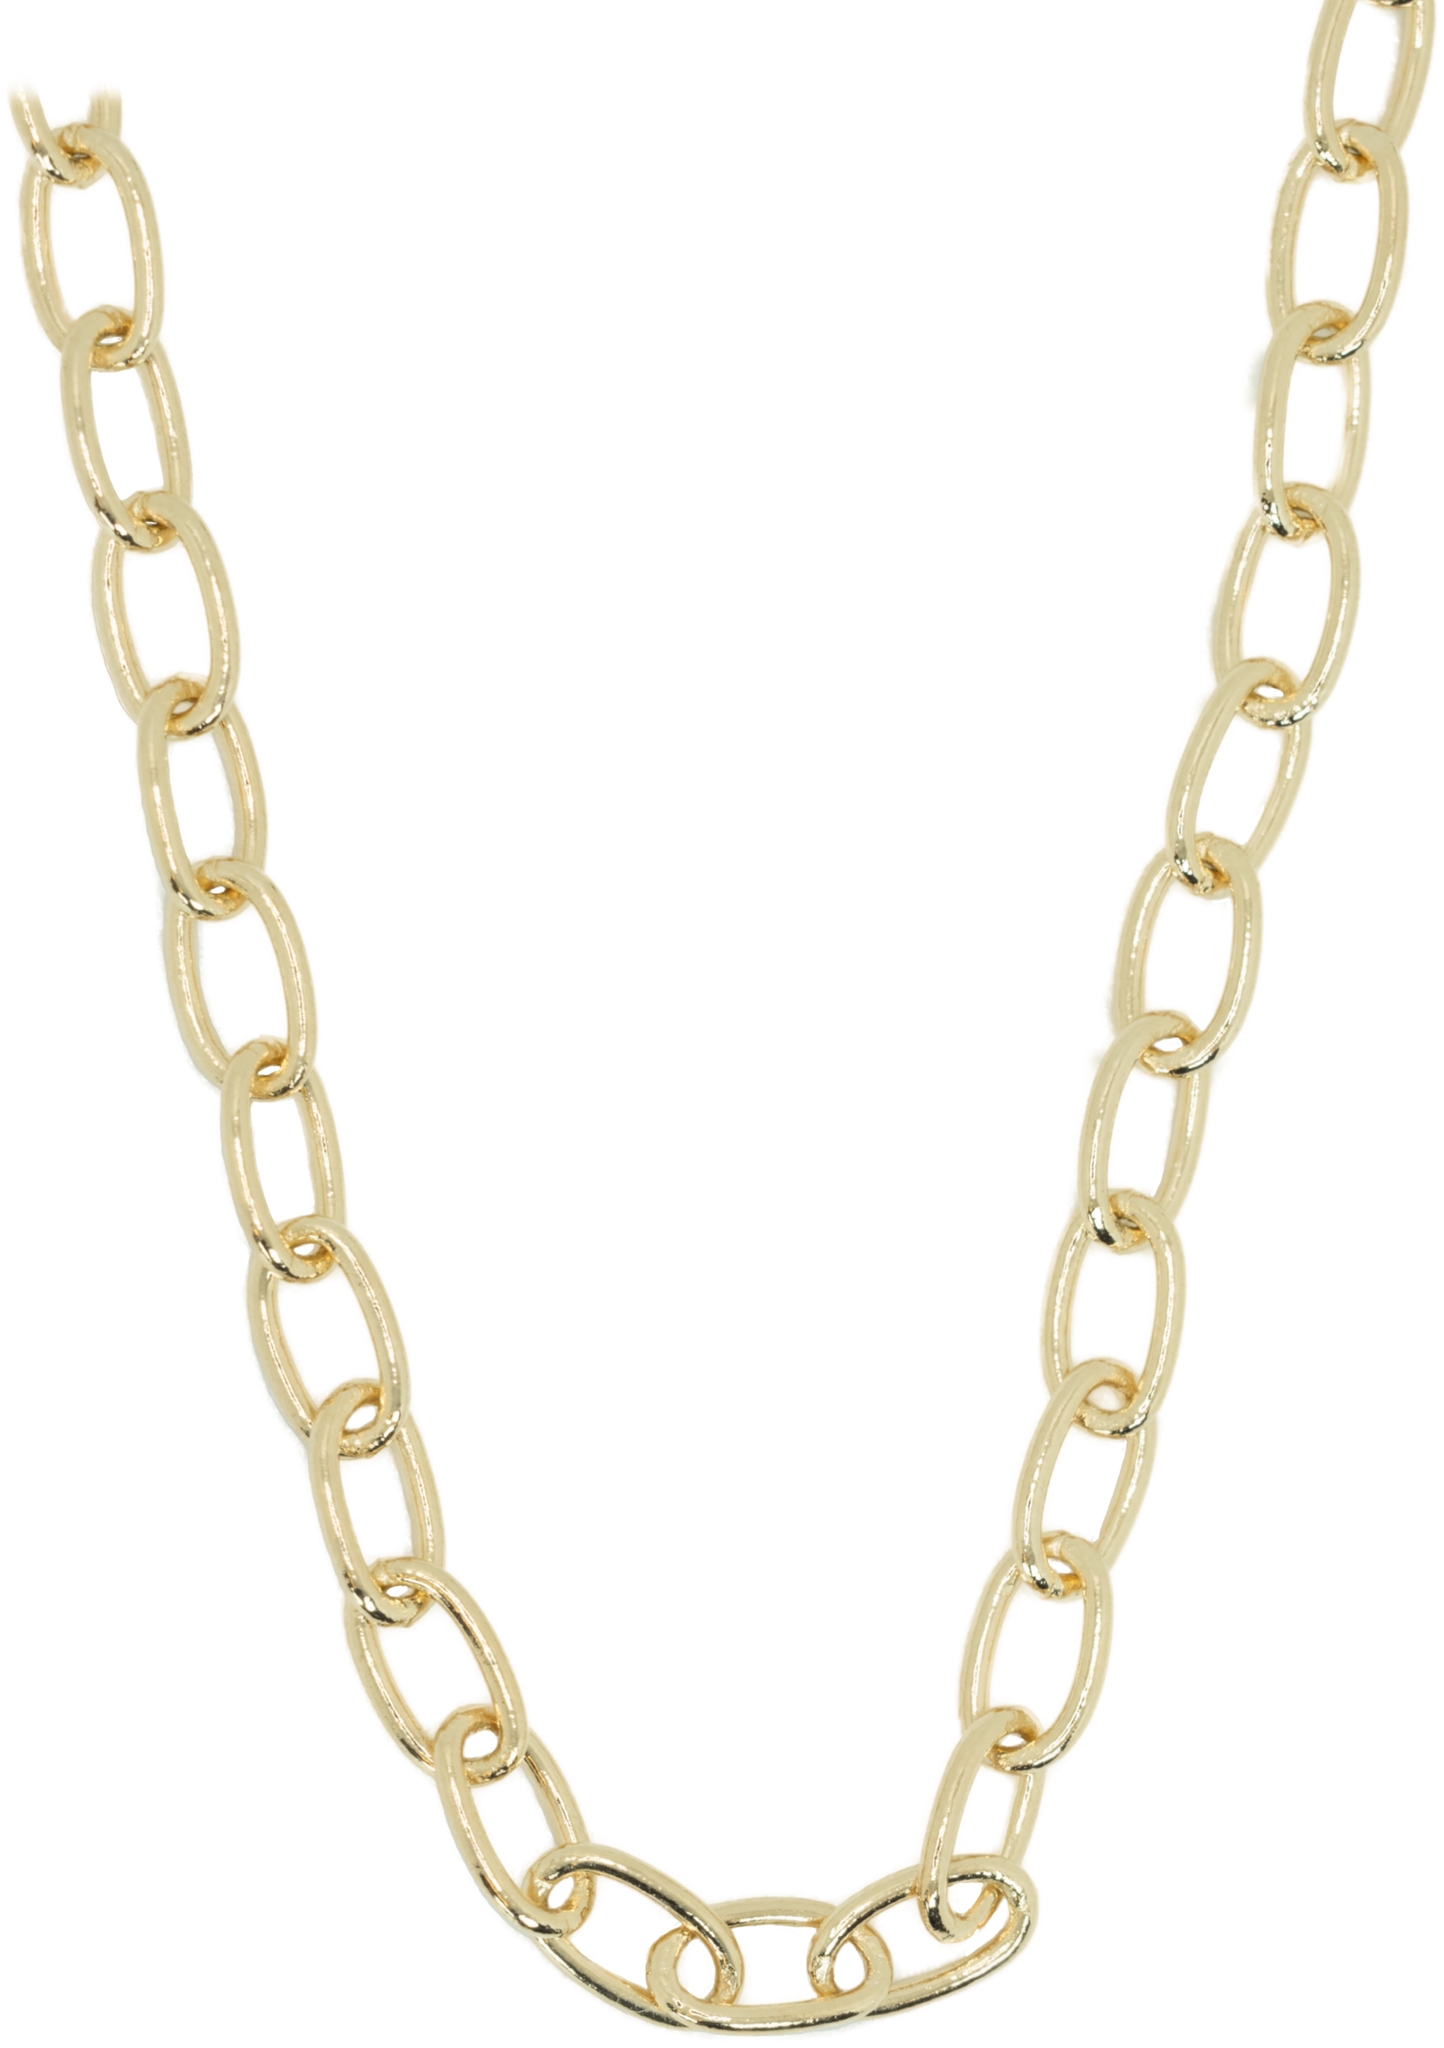 The Cadena Link Necklace